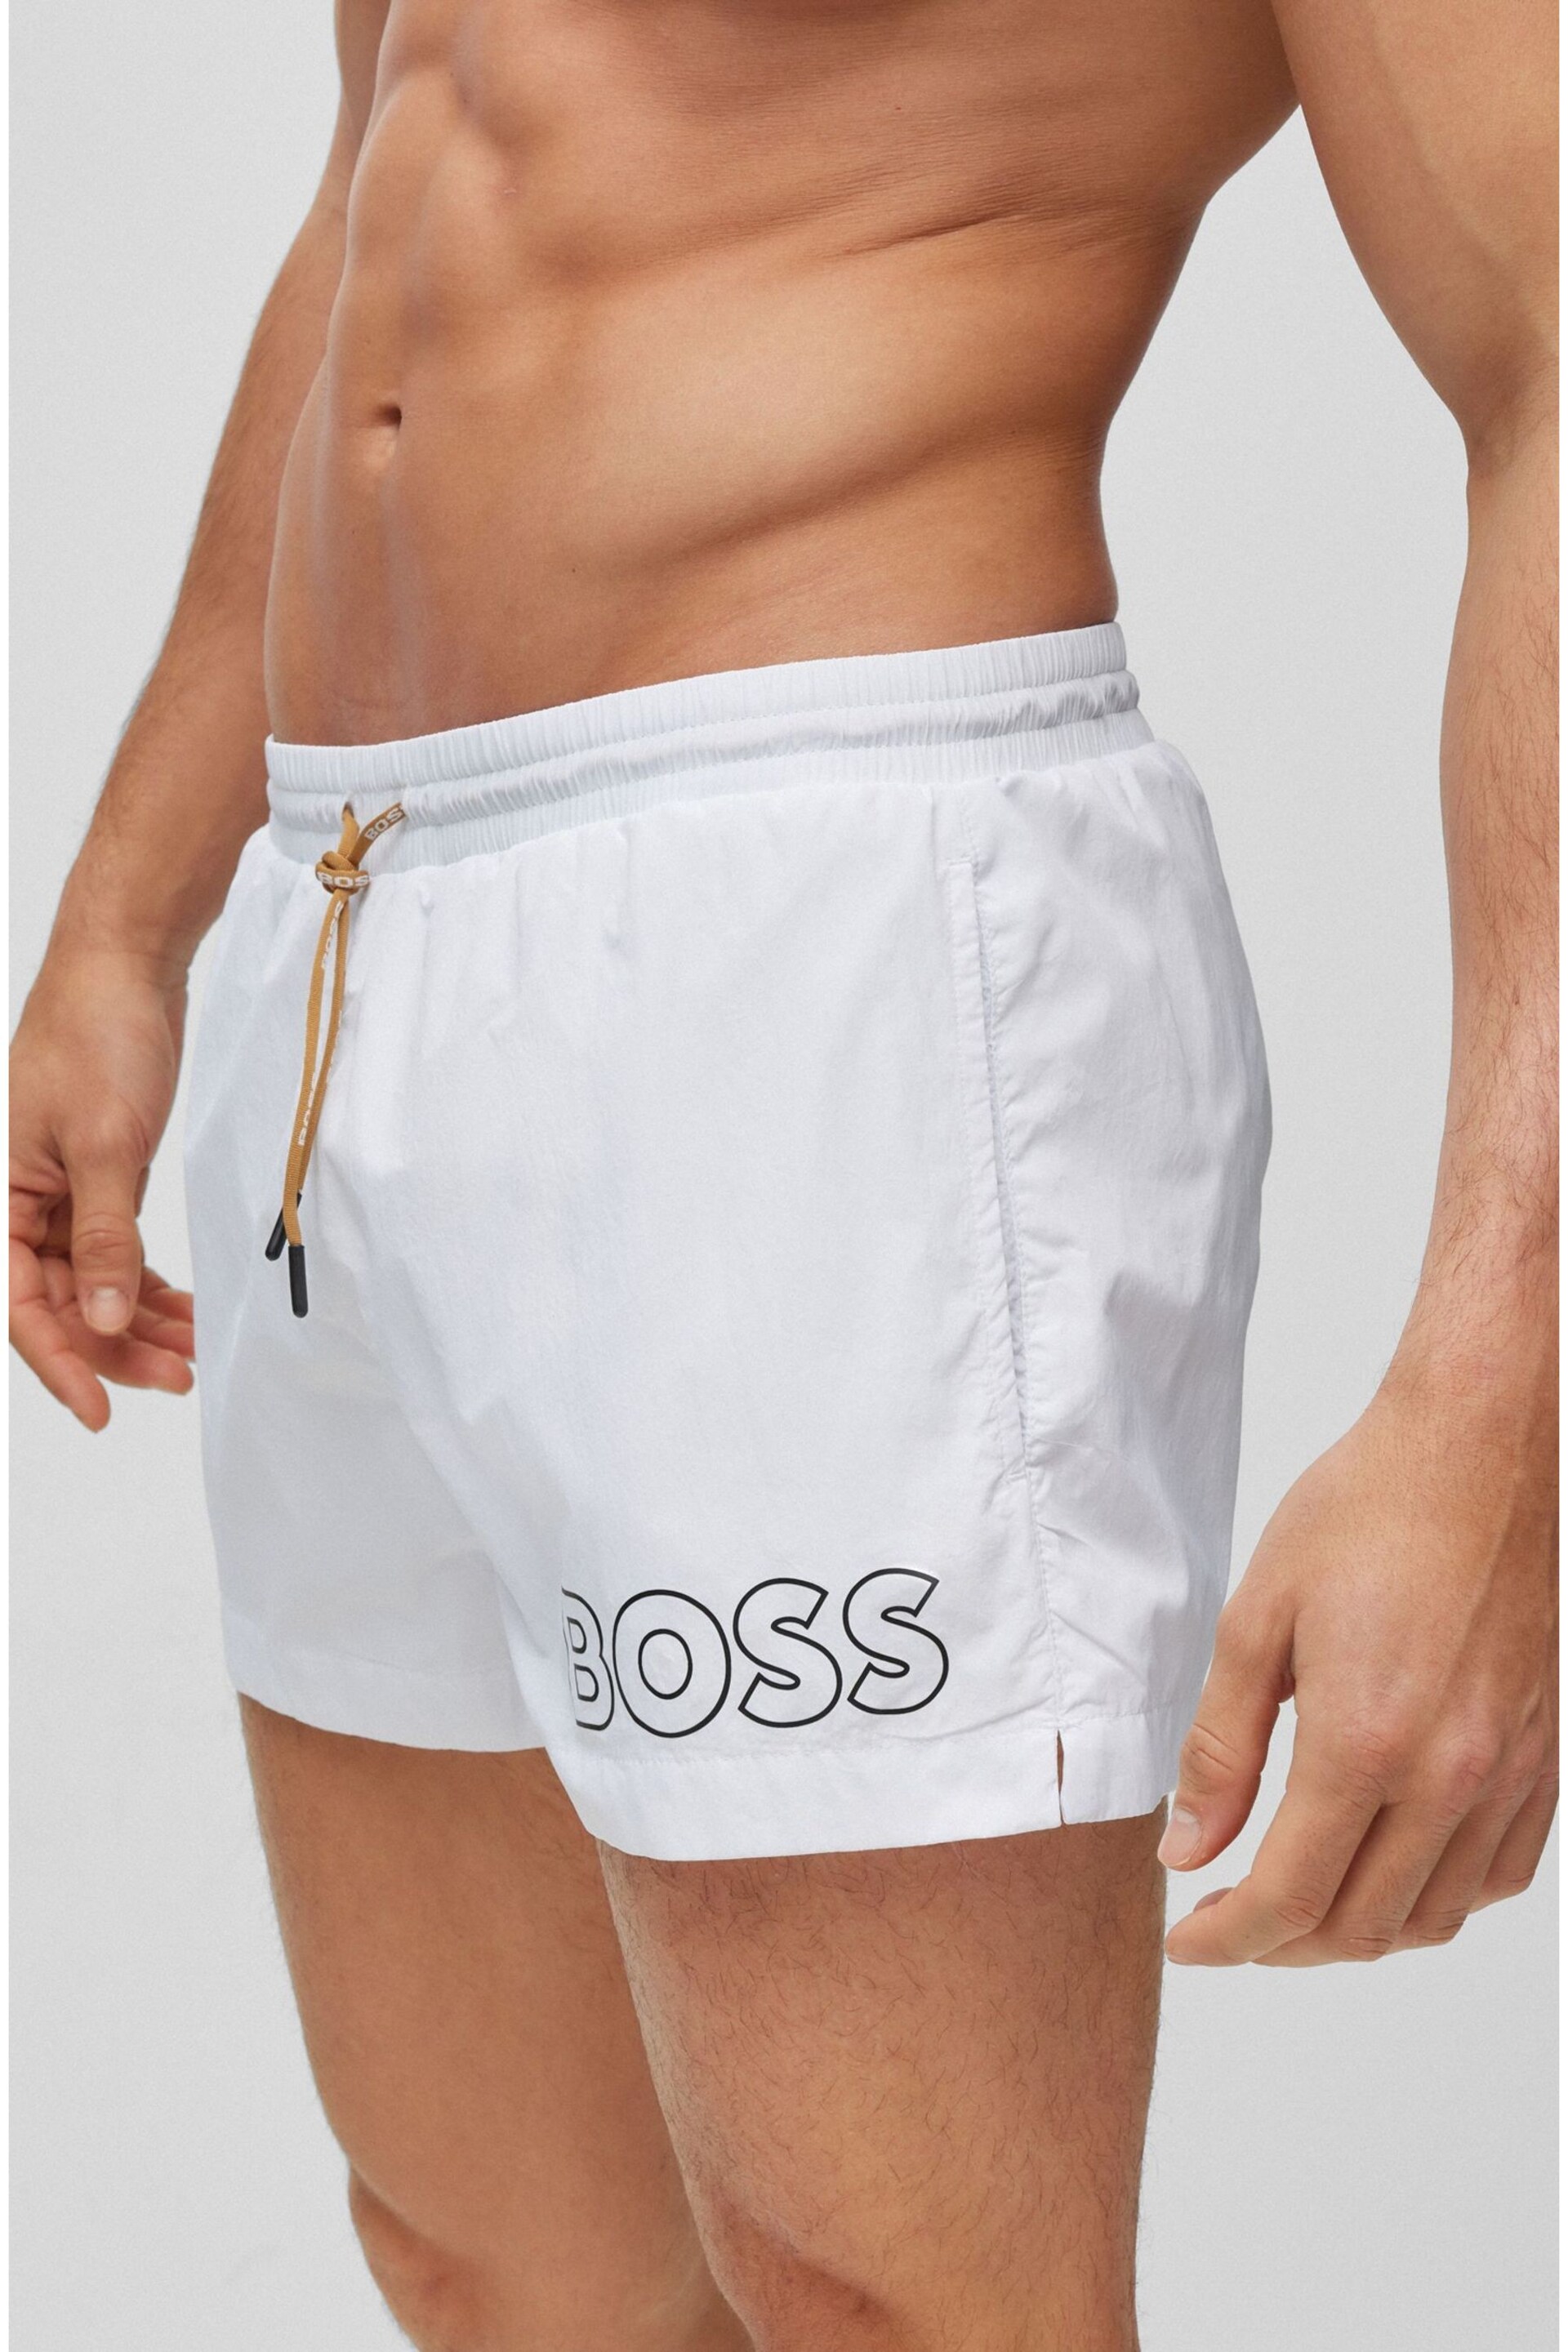 BOSS White Quick-Dry Outlined Logo Swim Shorts - Image 1 of 4